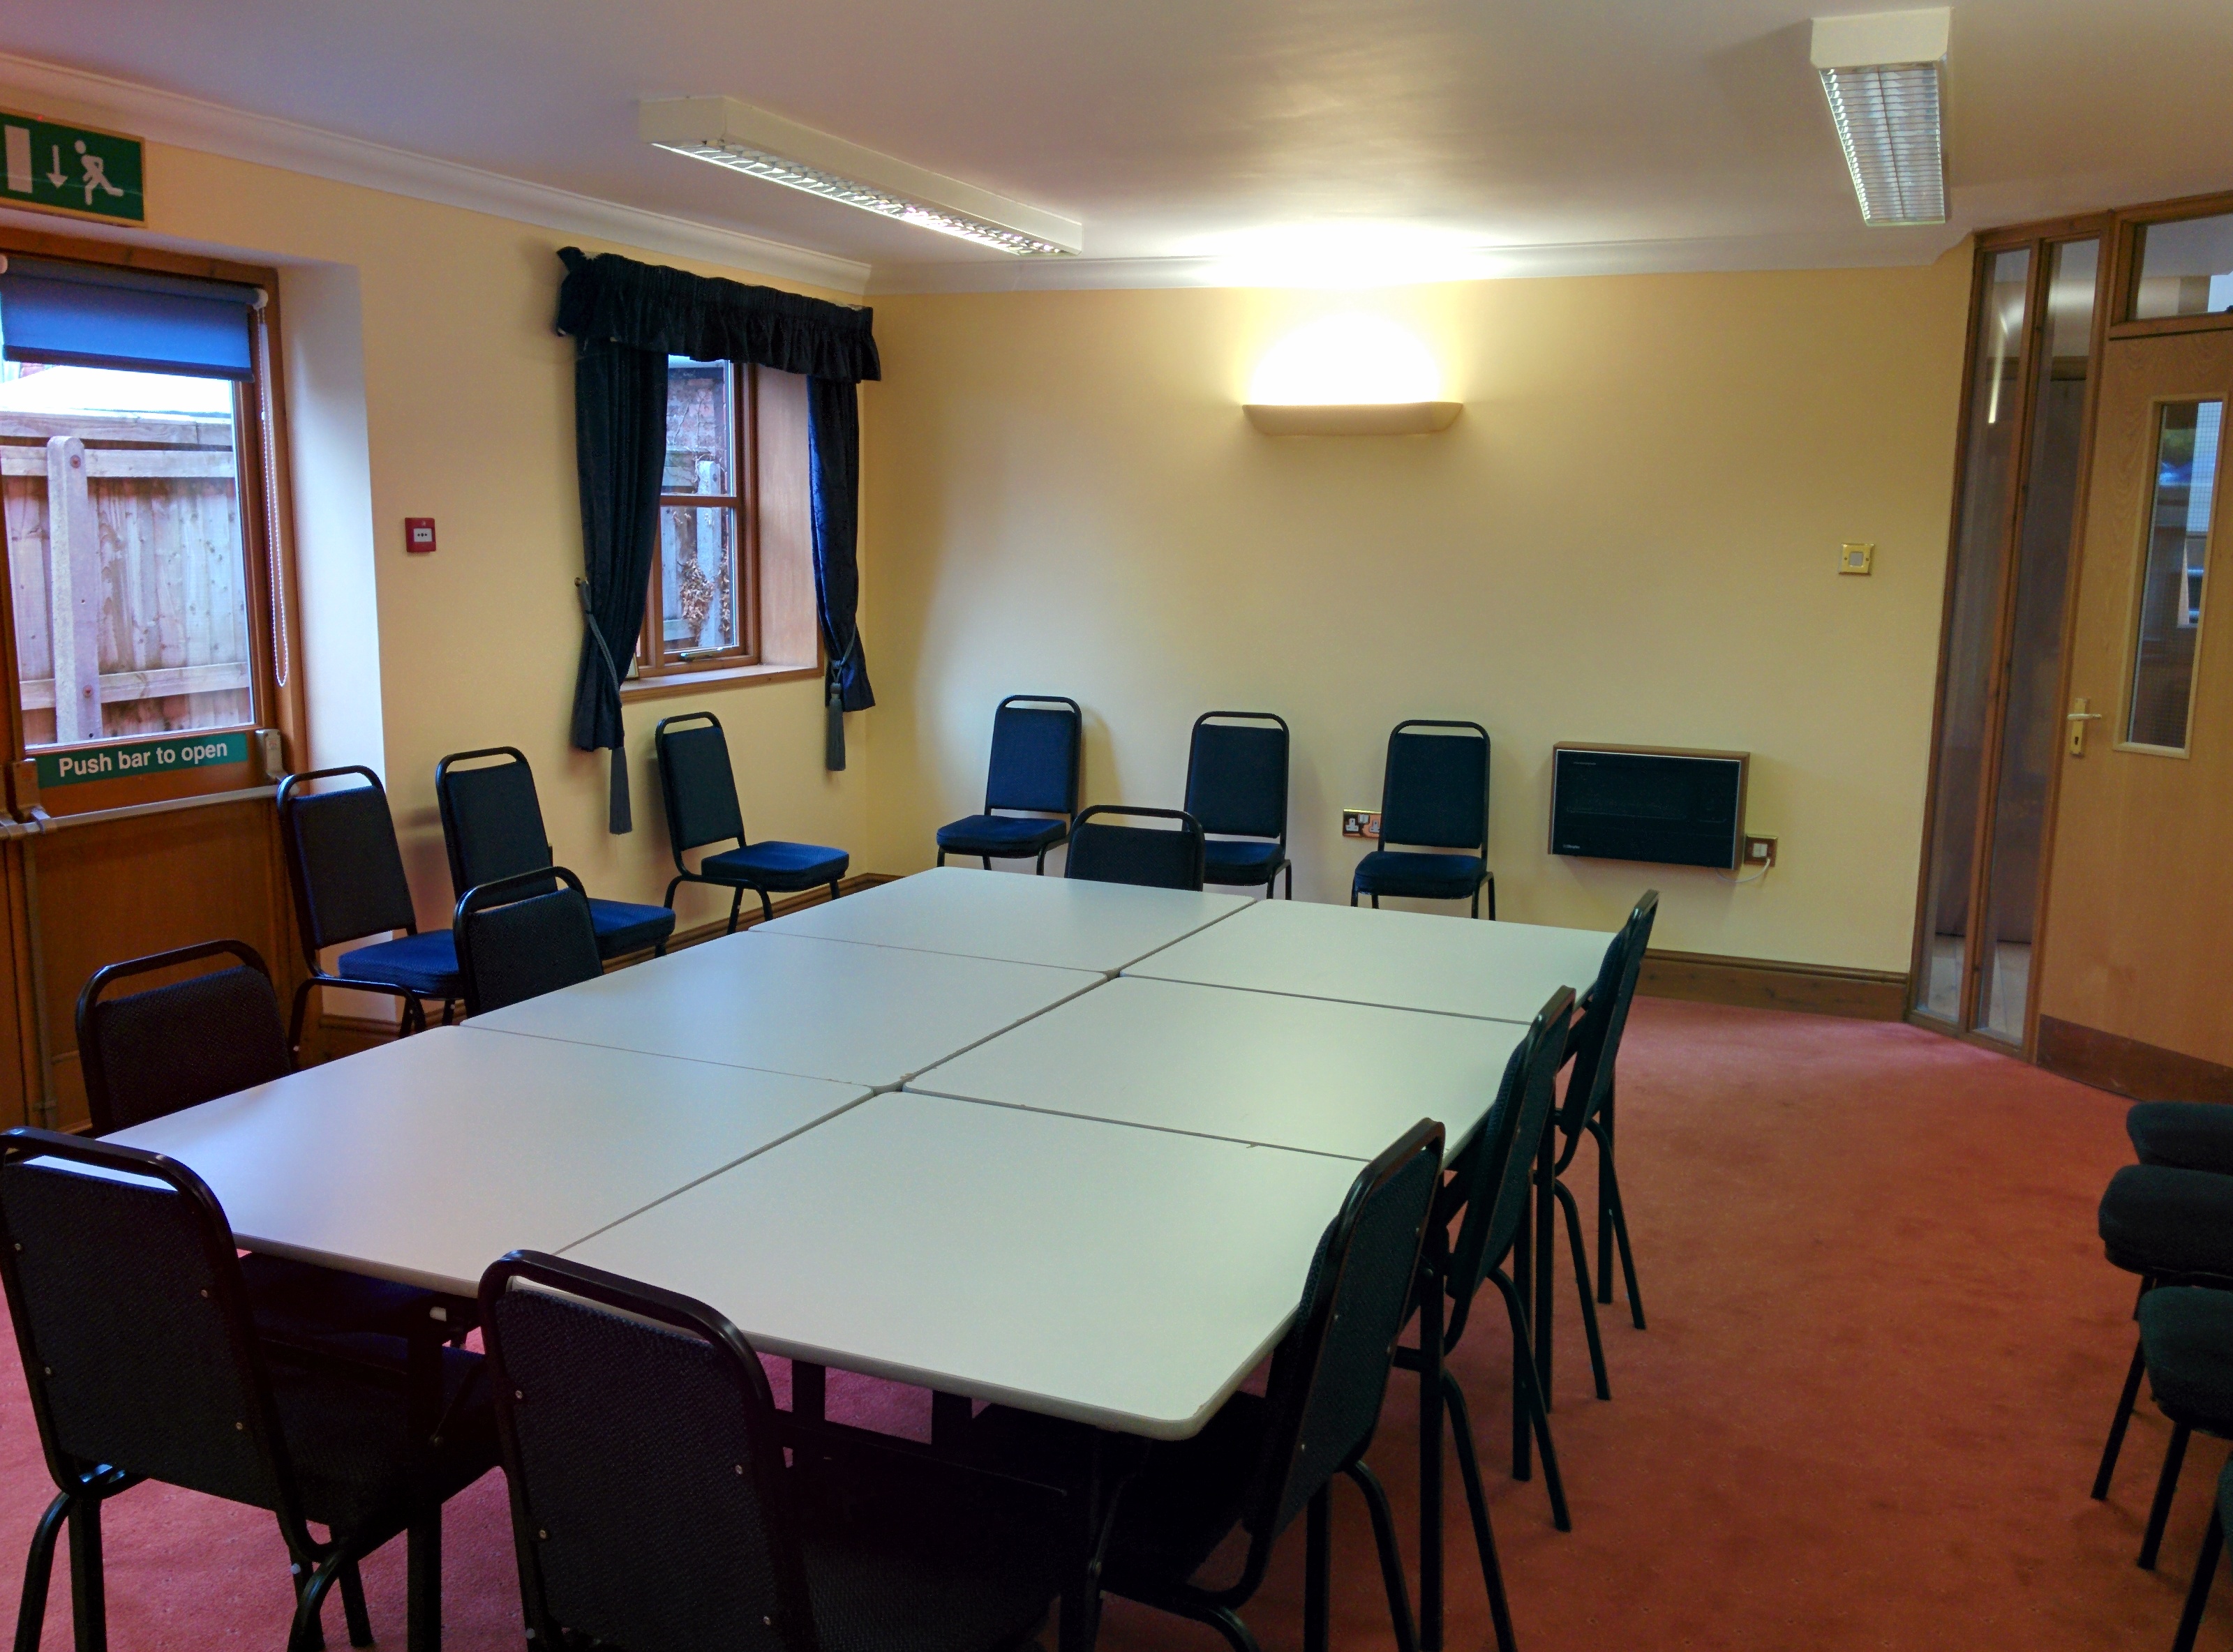 The meeting room at Dymock Parish Hall.